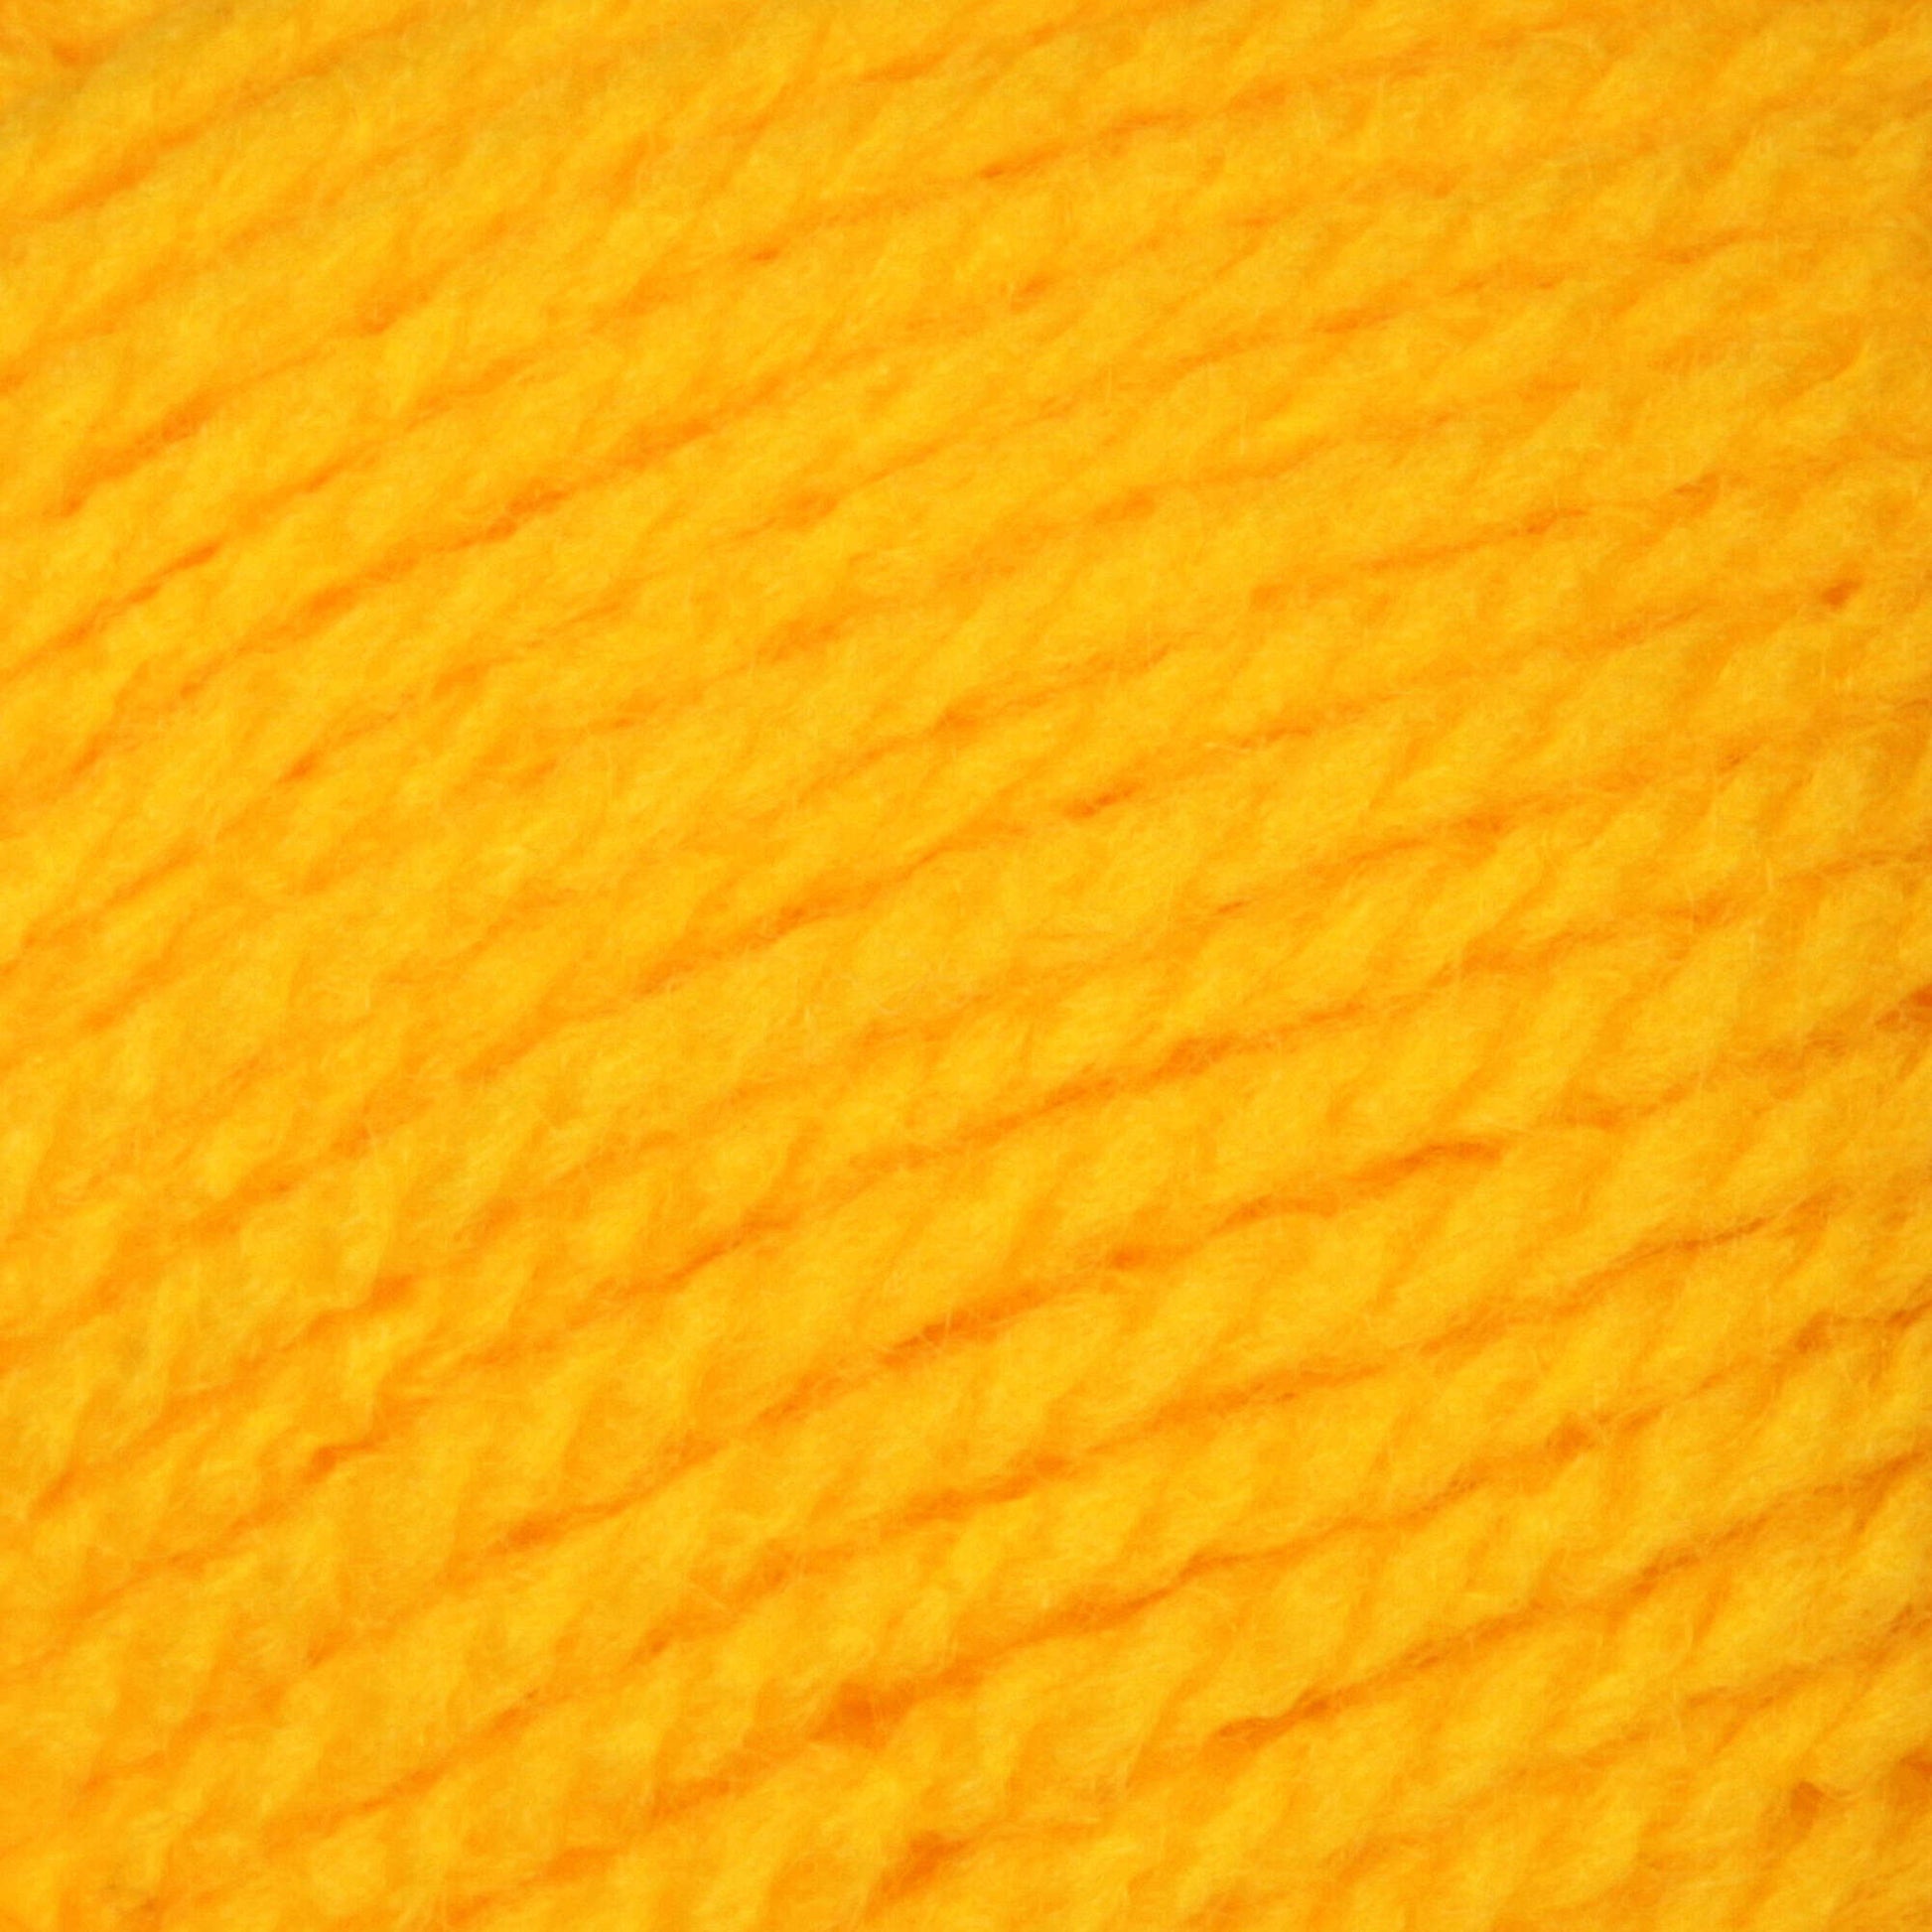 Patons Astra Yarn School Bus Yellow